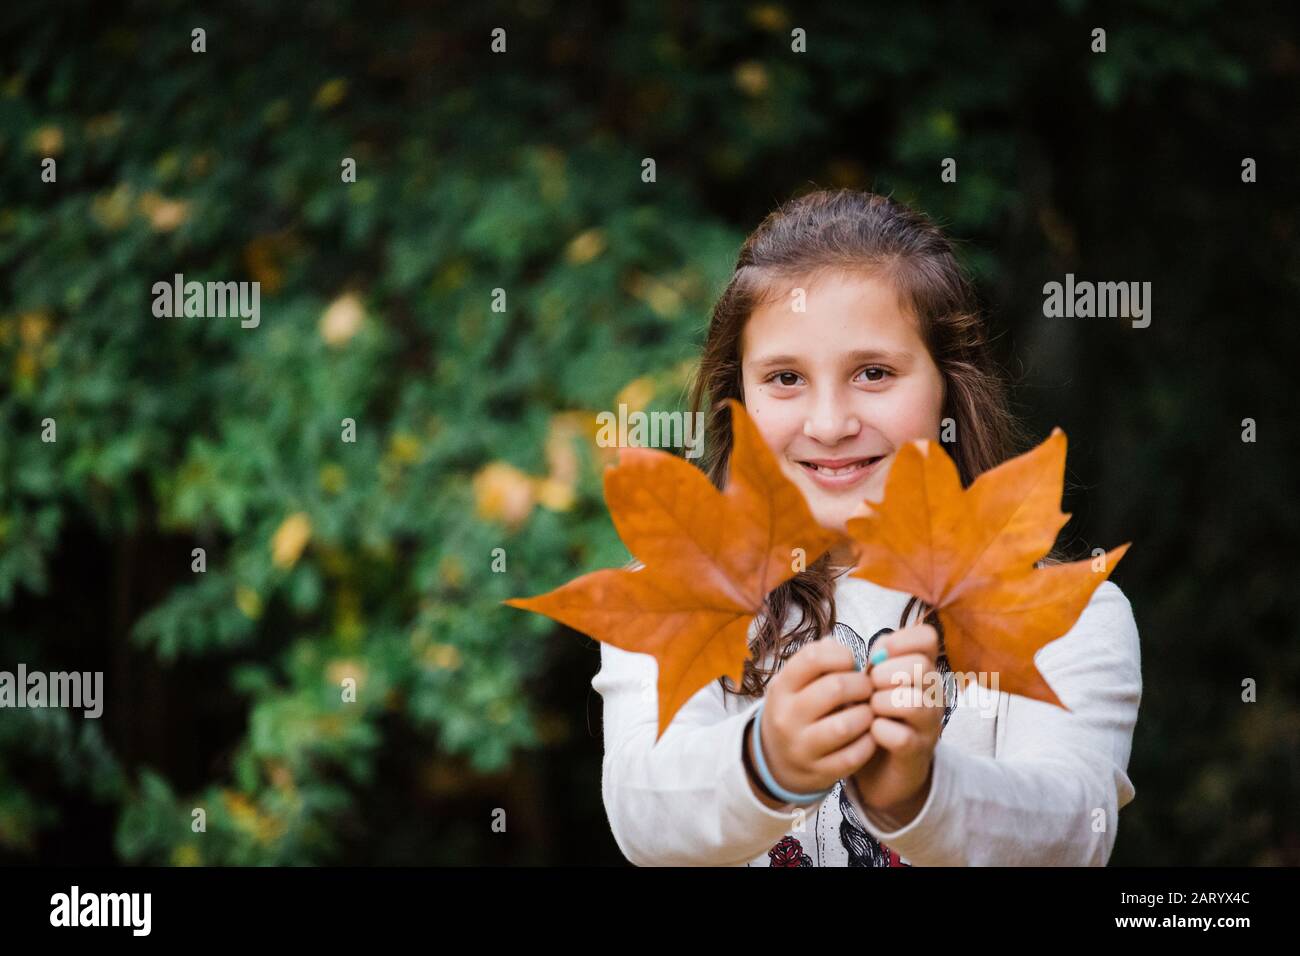 Smiling girl holding autumn leaves Stock Photo